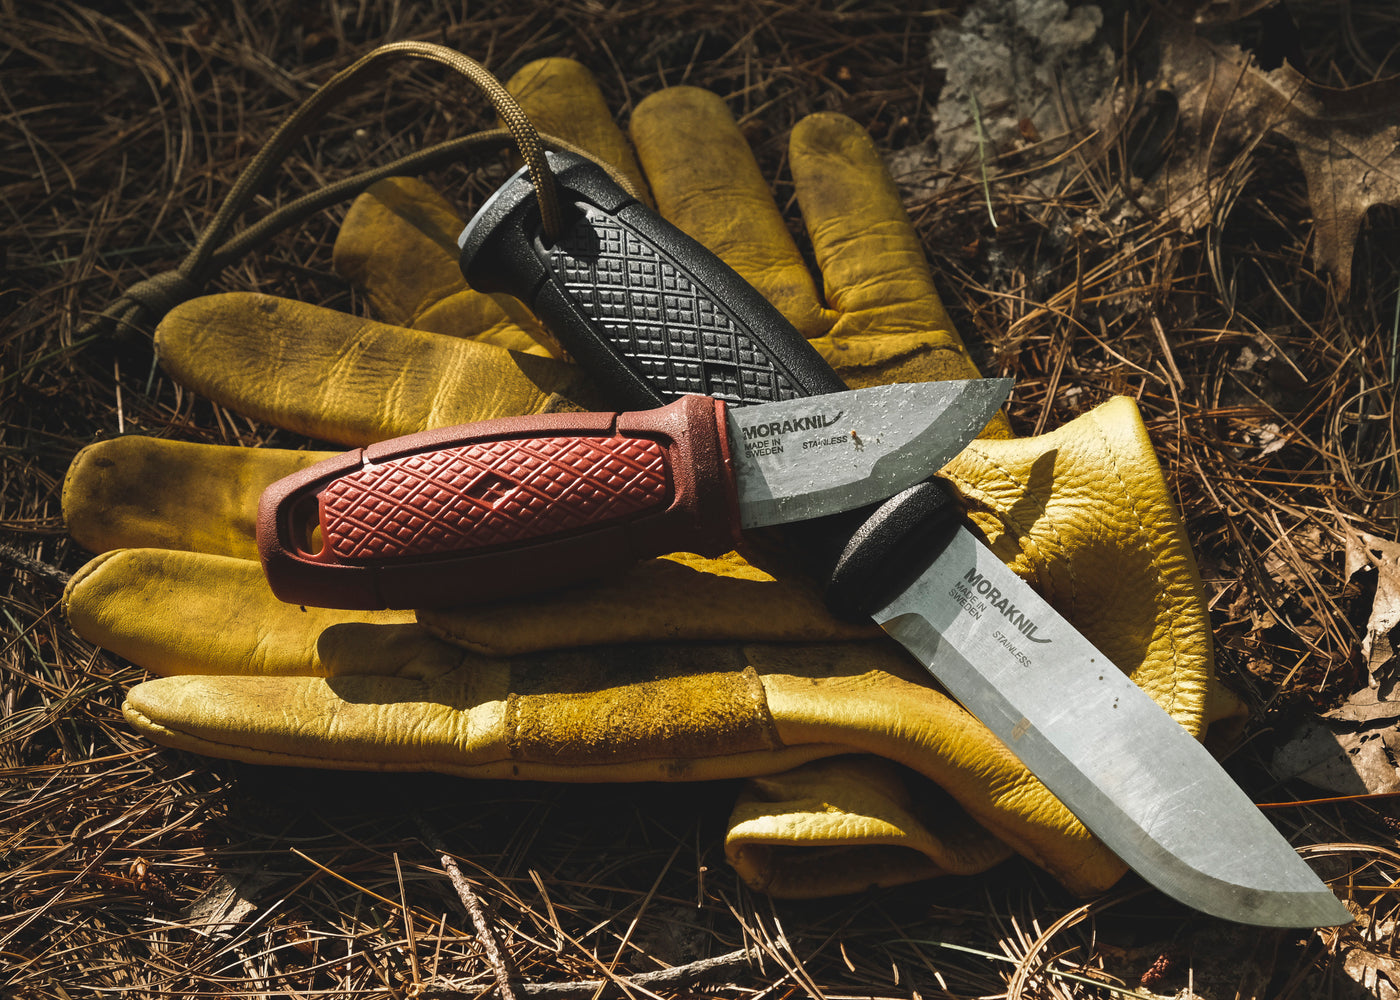 Survival Resources > Knives & Tools > Morakniv Eldris Neck Knife